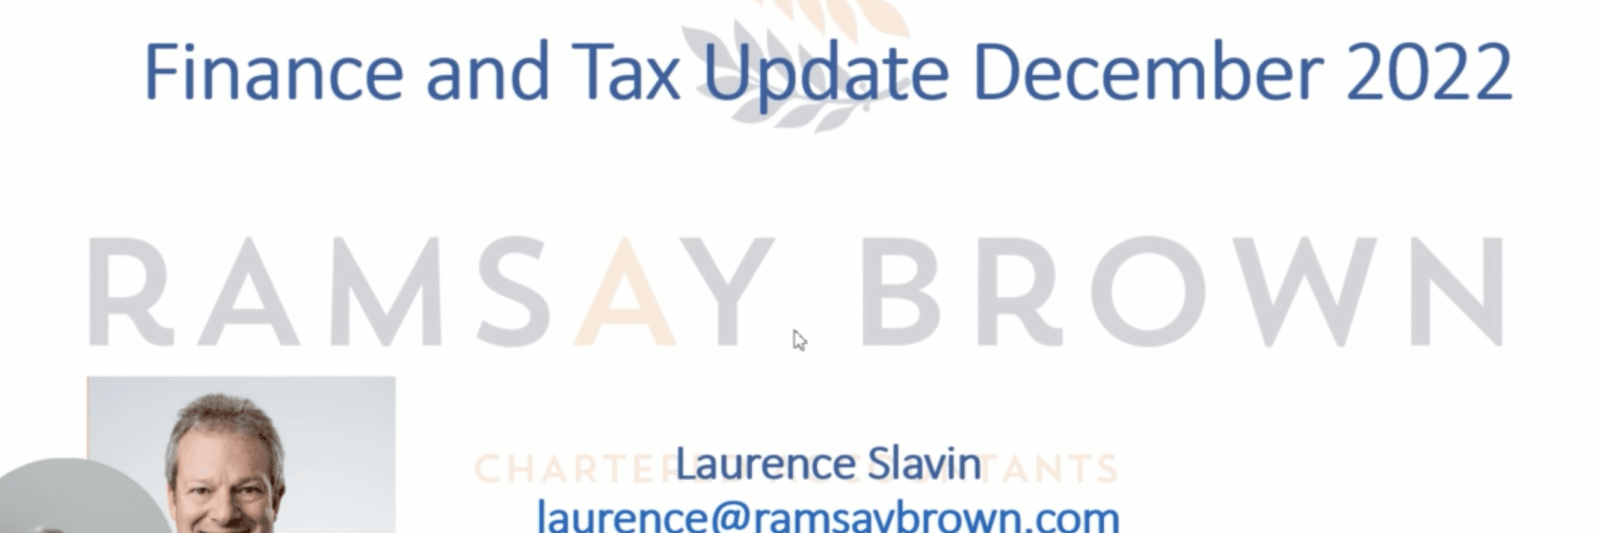 December 2022 Tax and Finance Update